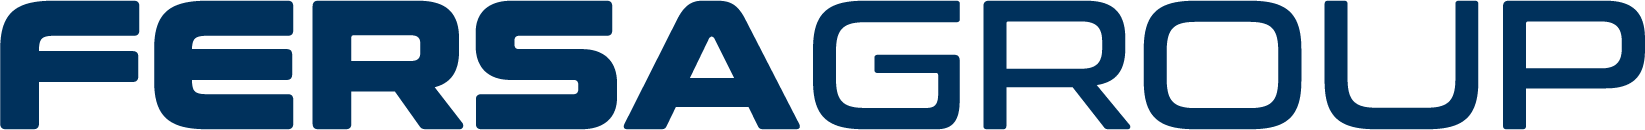 Fersa Group Logo cmyk